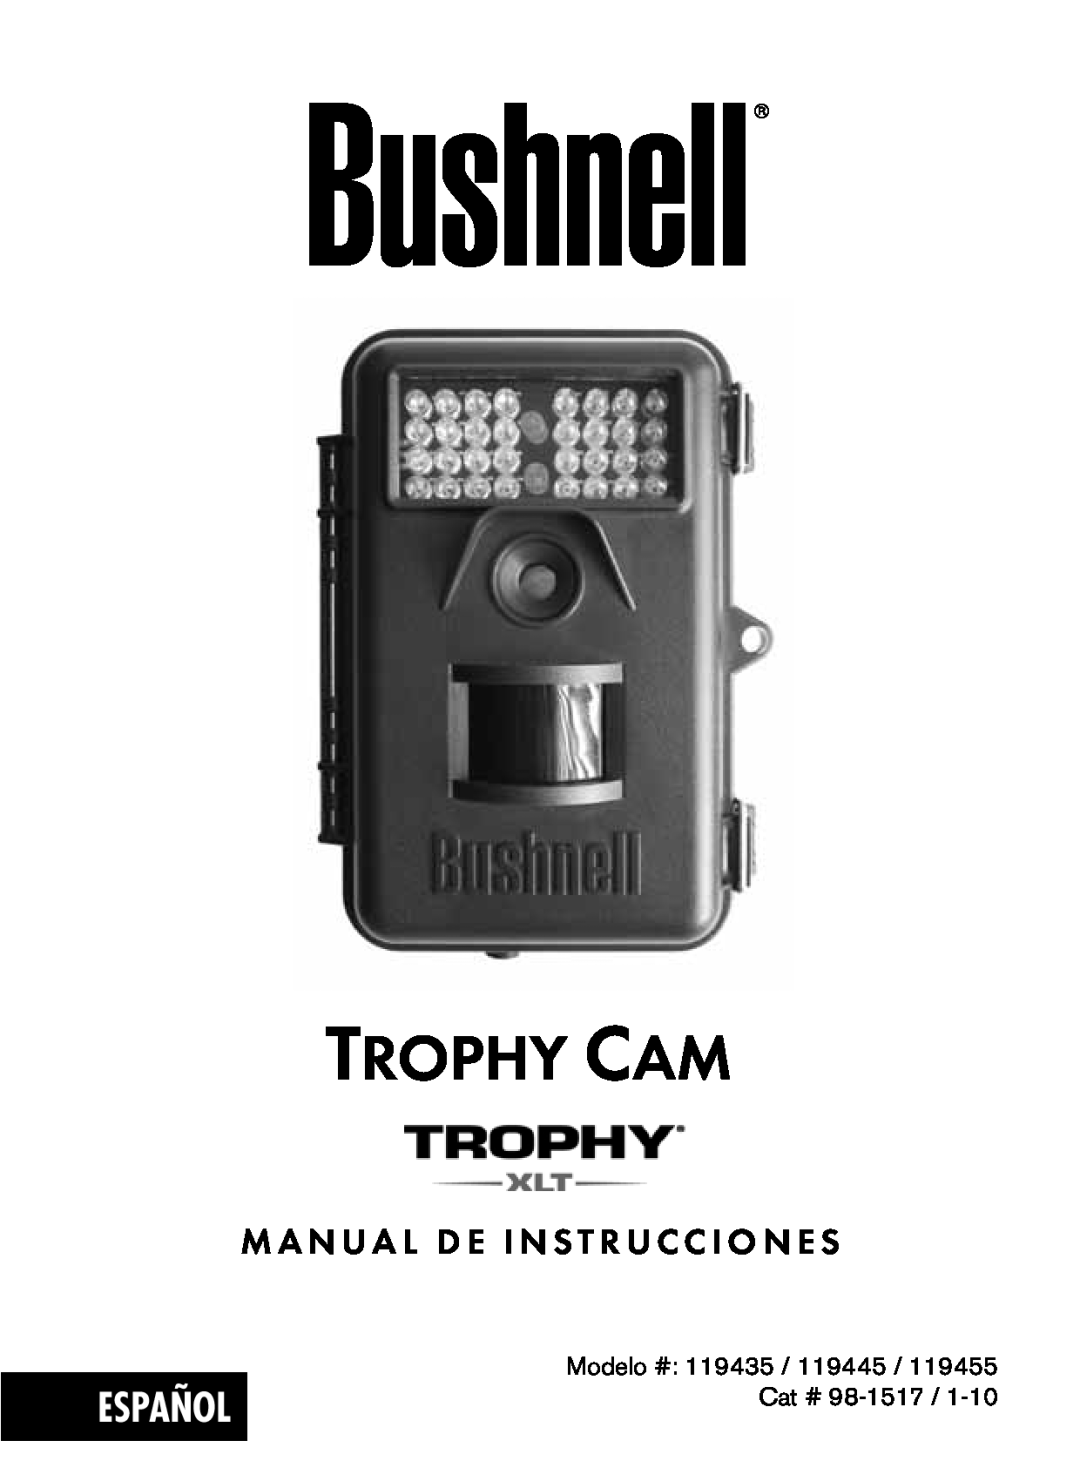 Bushnell 119435, 119455, 119445 instruction manual M A N U A L D E I N S T R U C C I O N E S, Español, Trophy Cam 